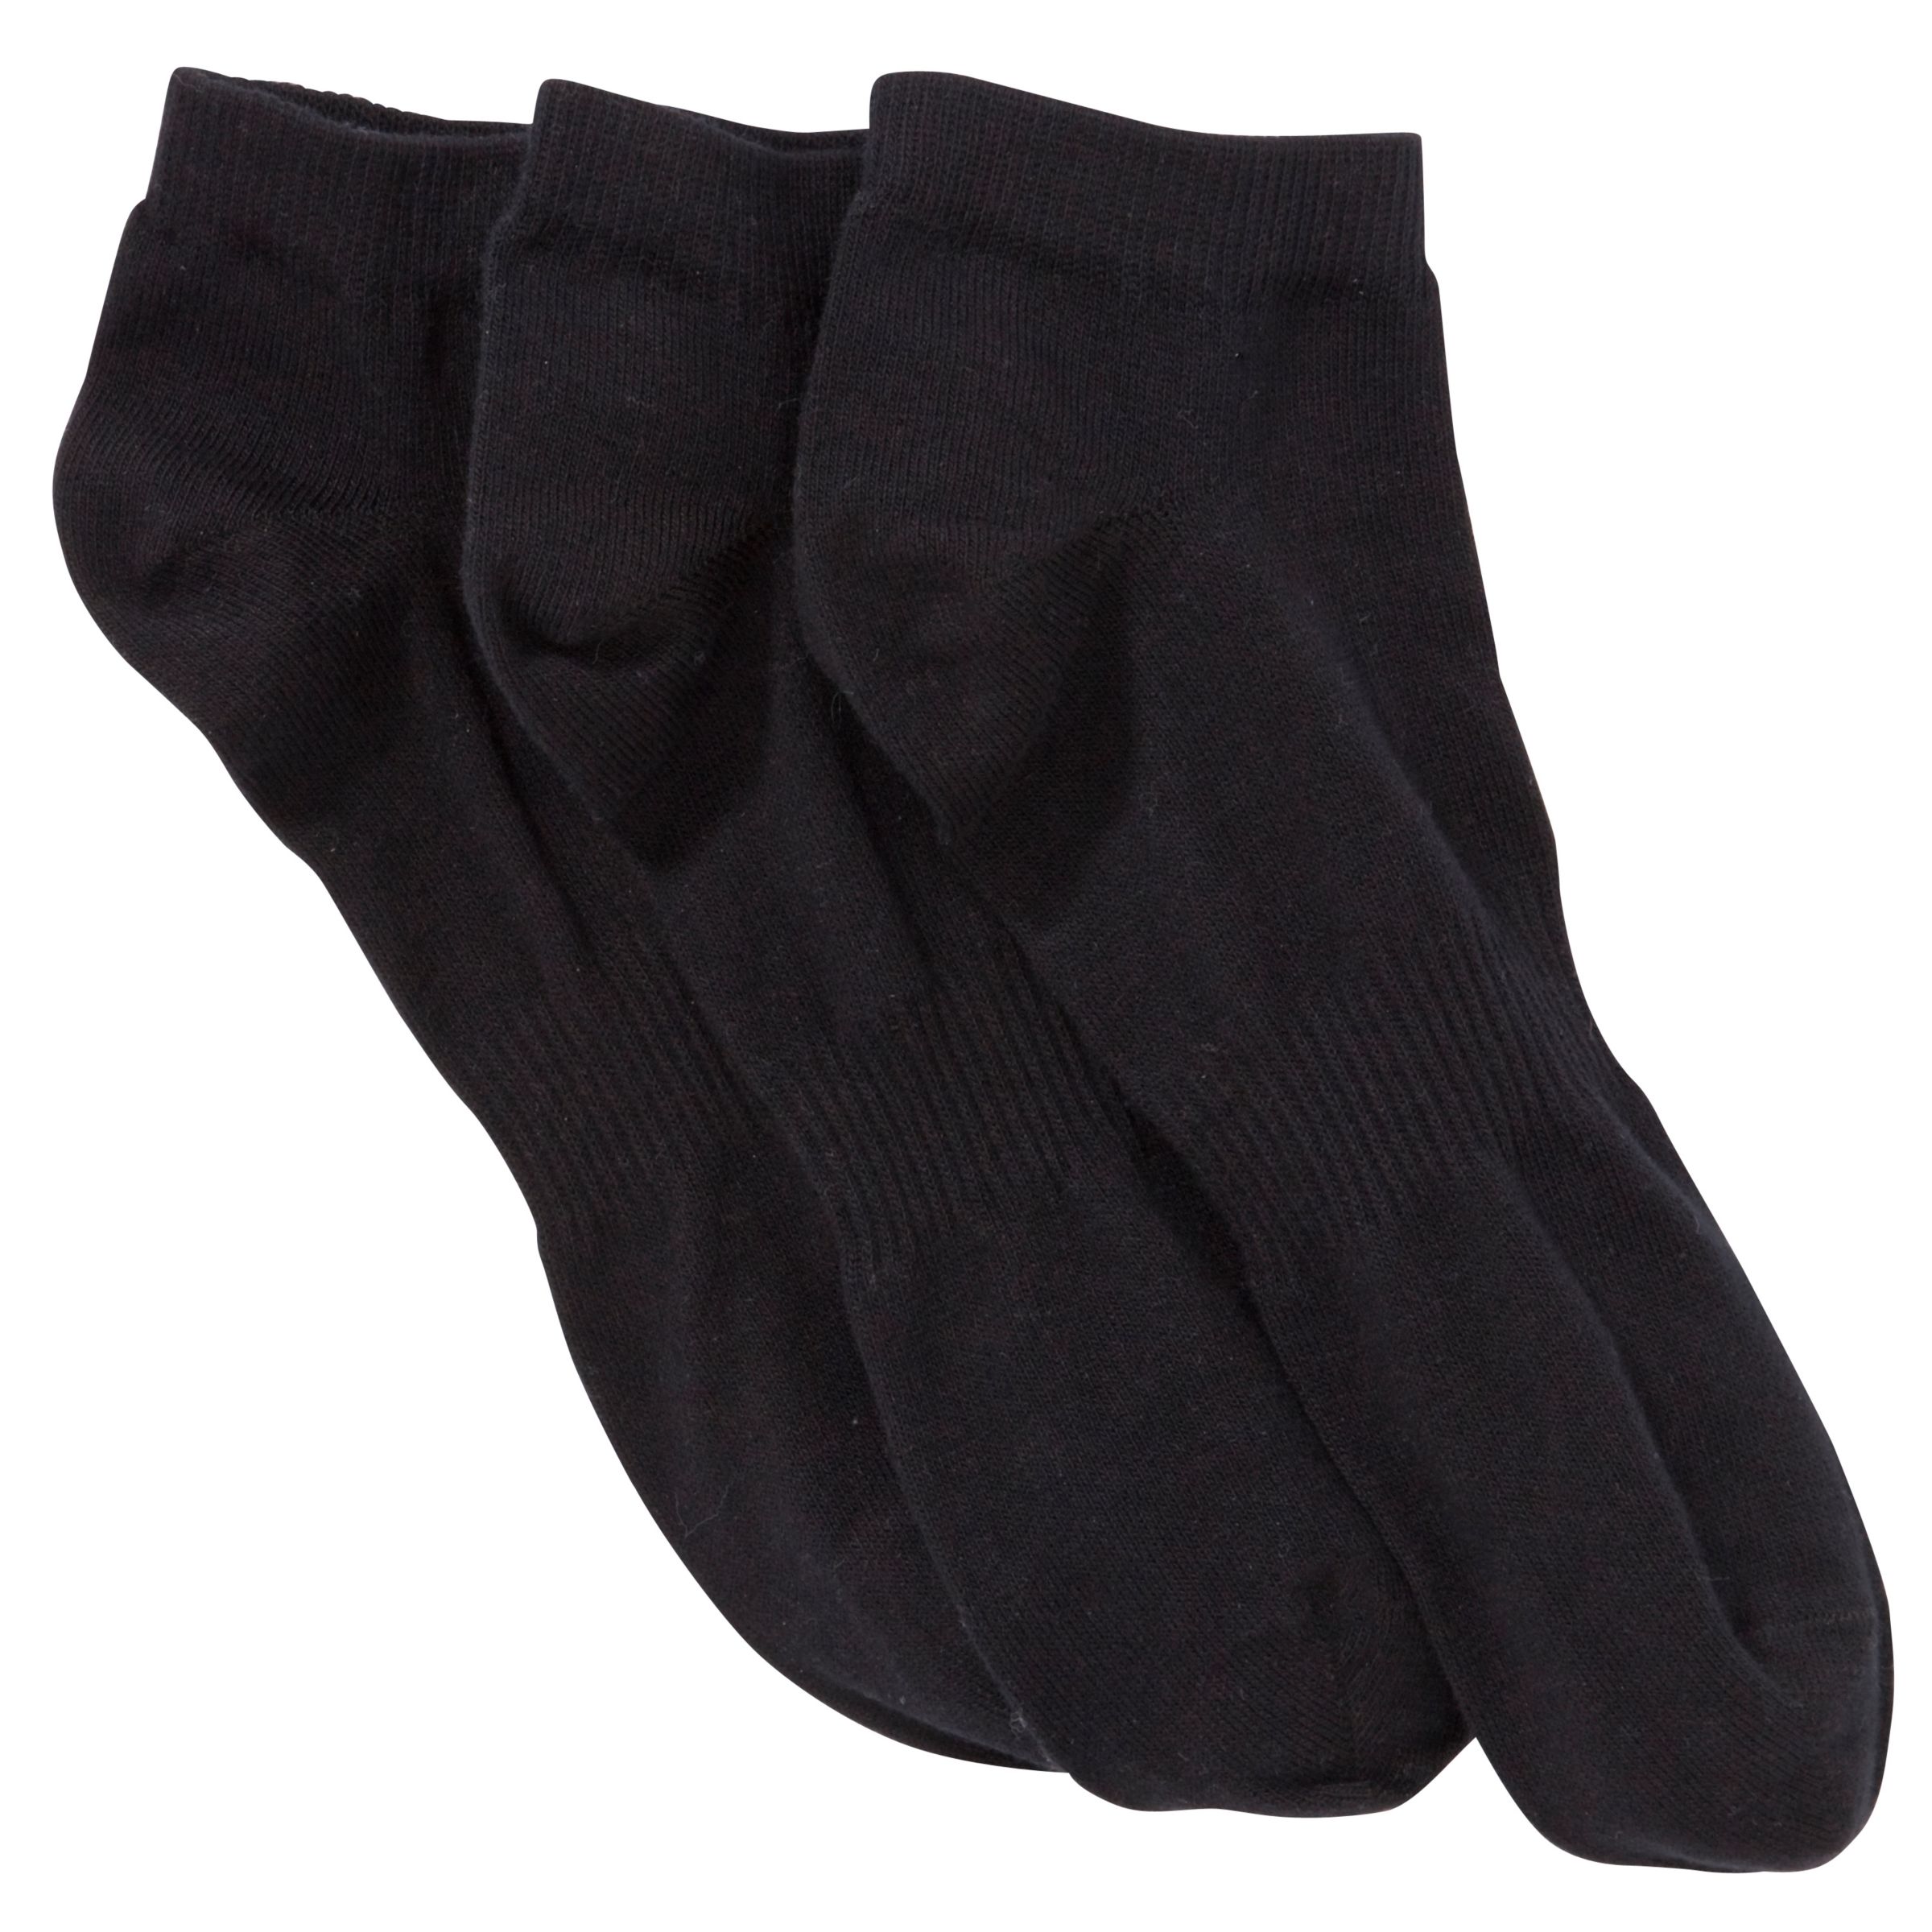 John Lewis & Partners Cotton Trainer Socks, Pack of 3, Black at John ...